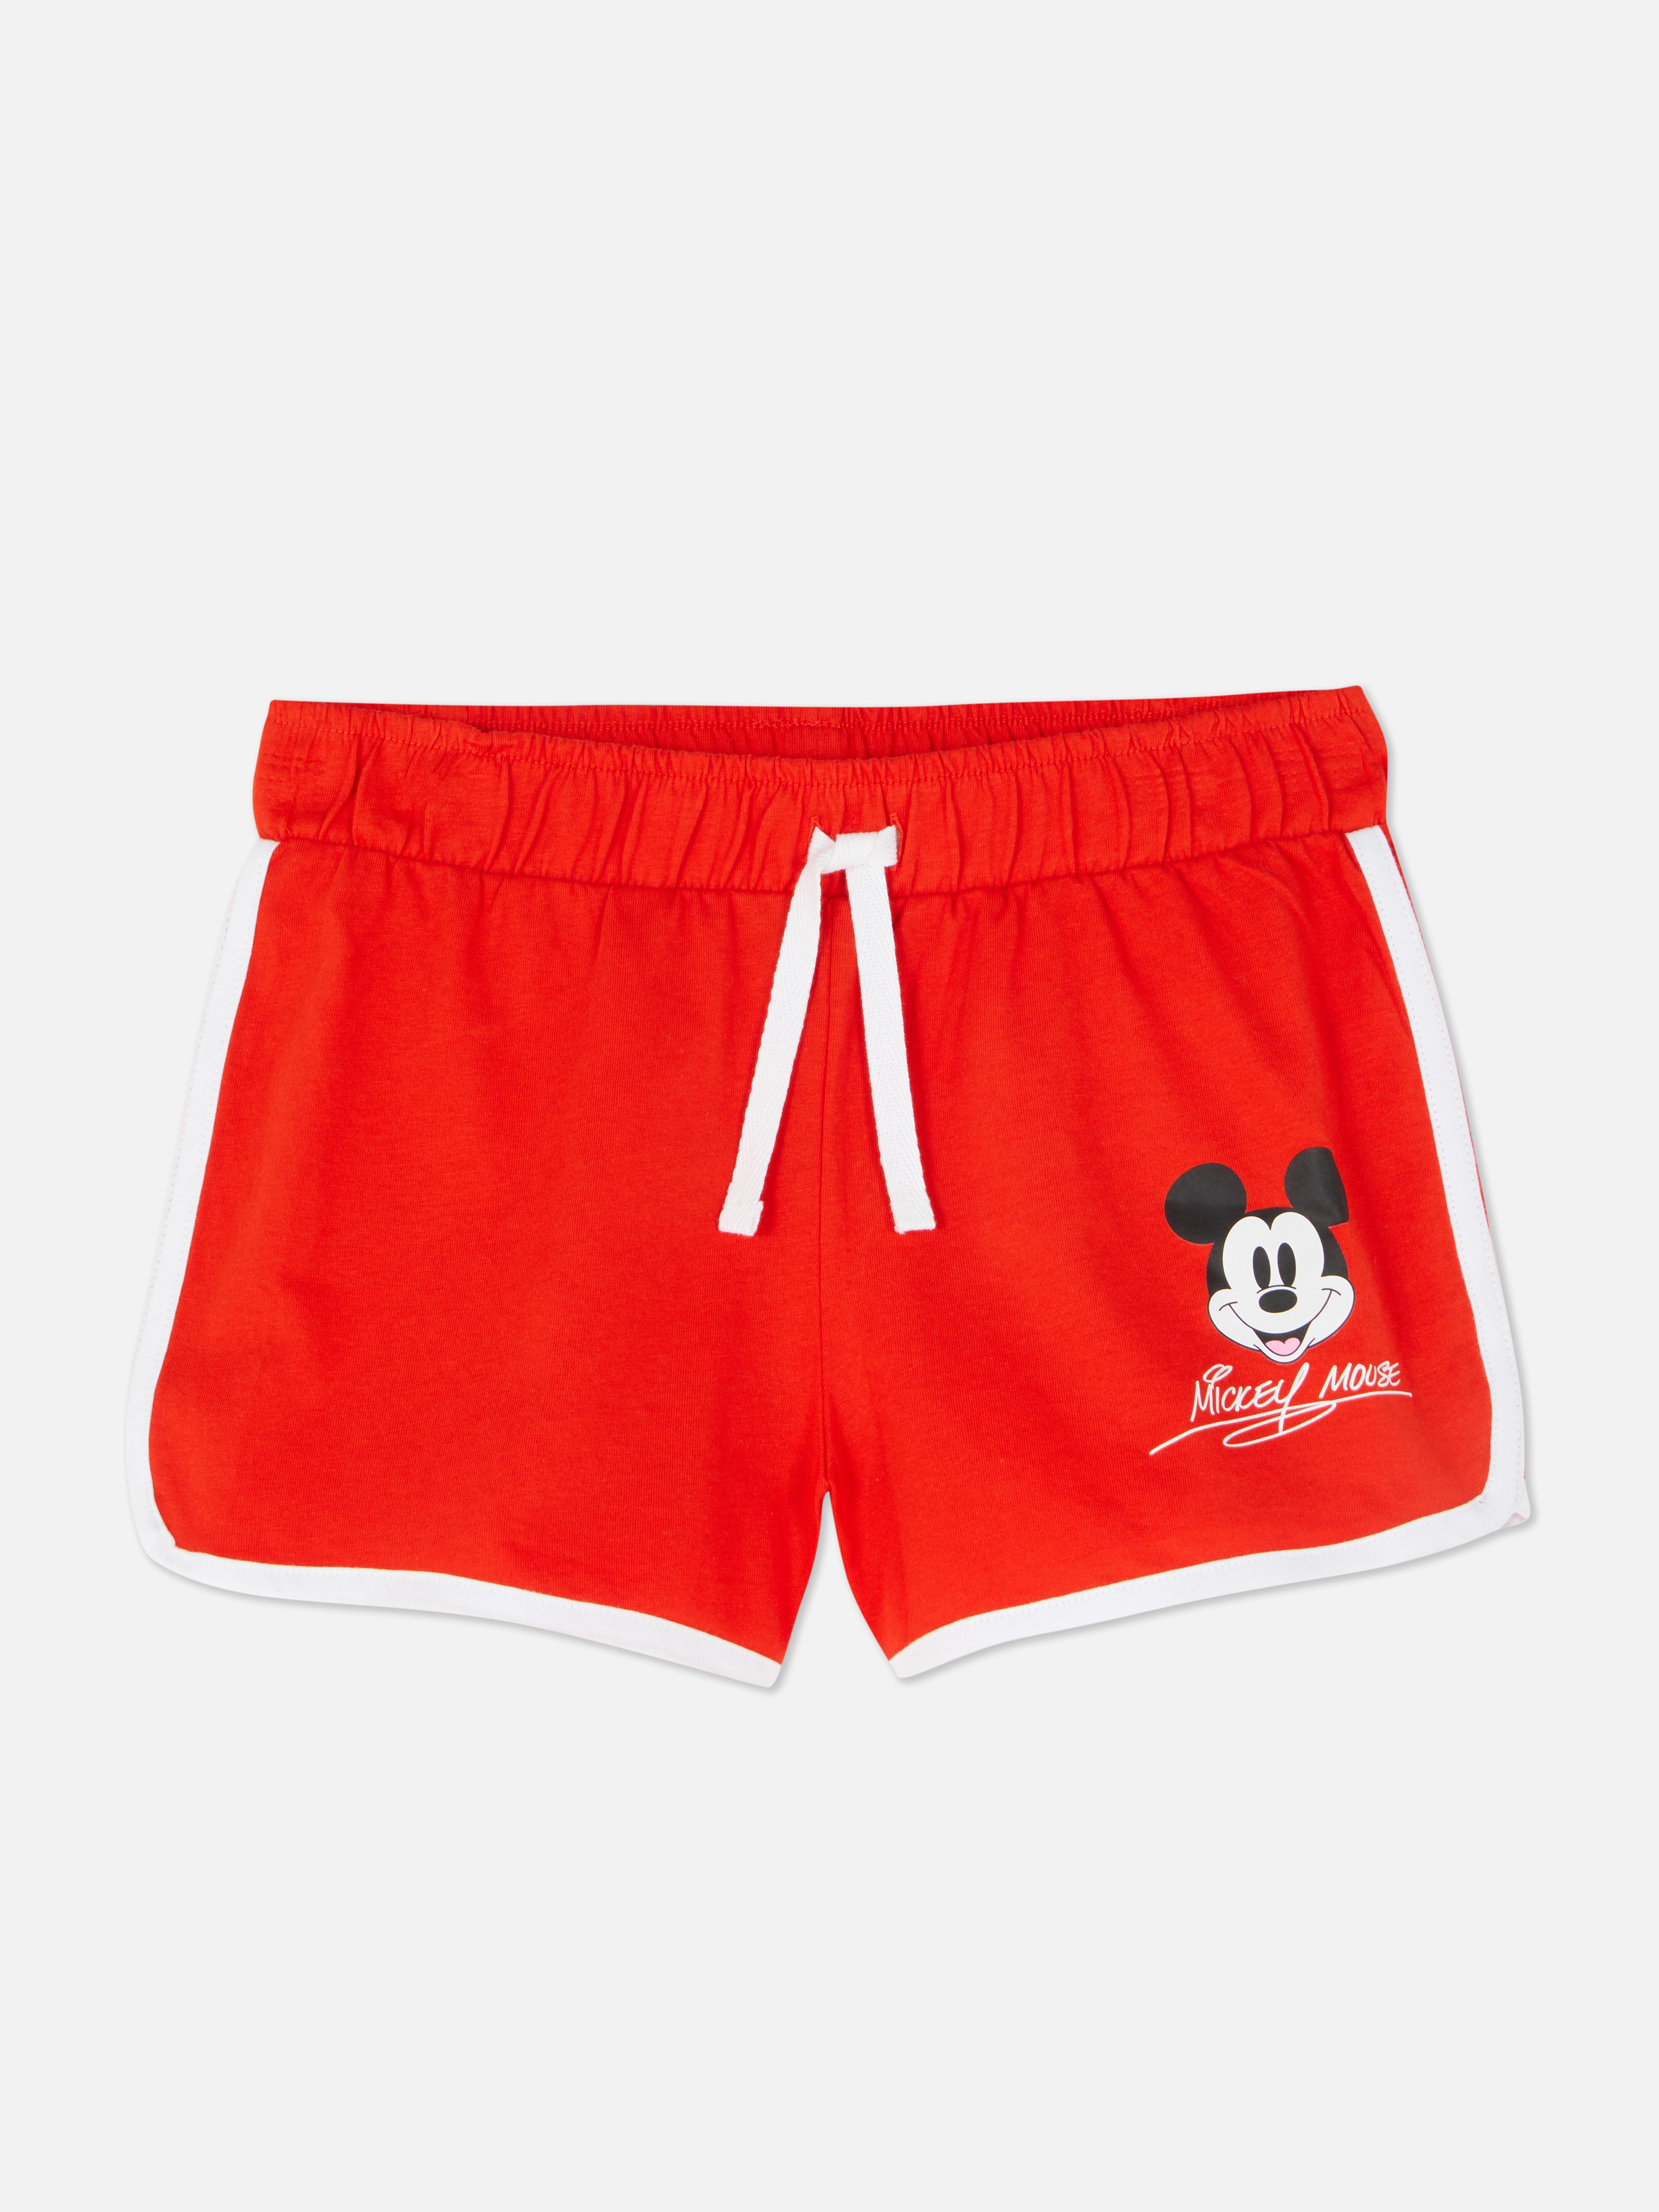 Pantalones Mickey Mouse de Disney | Primark